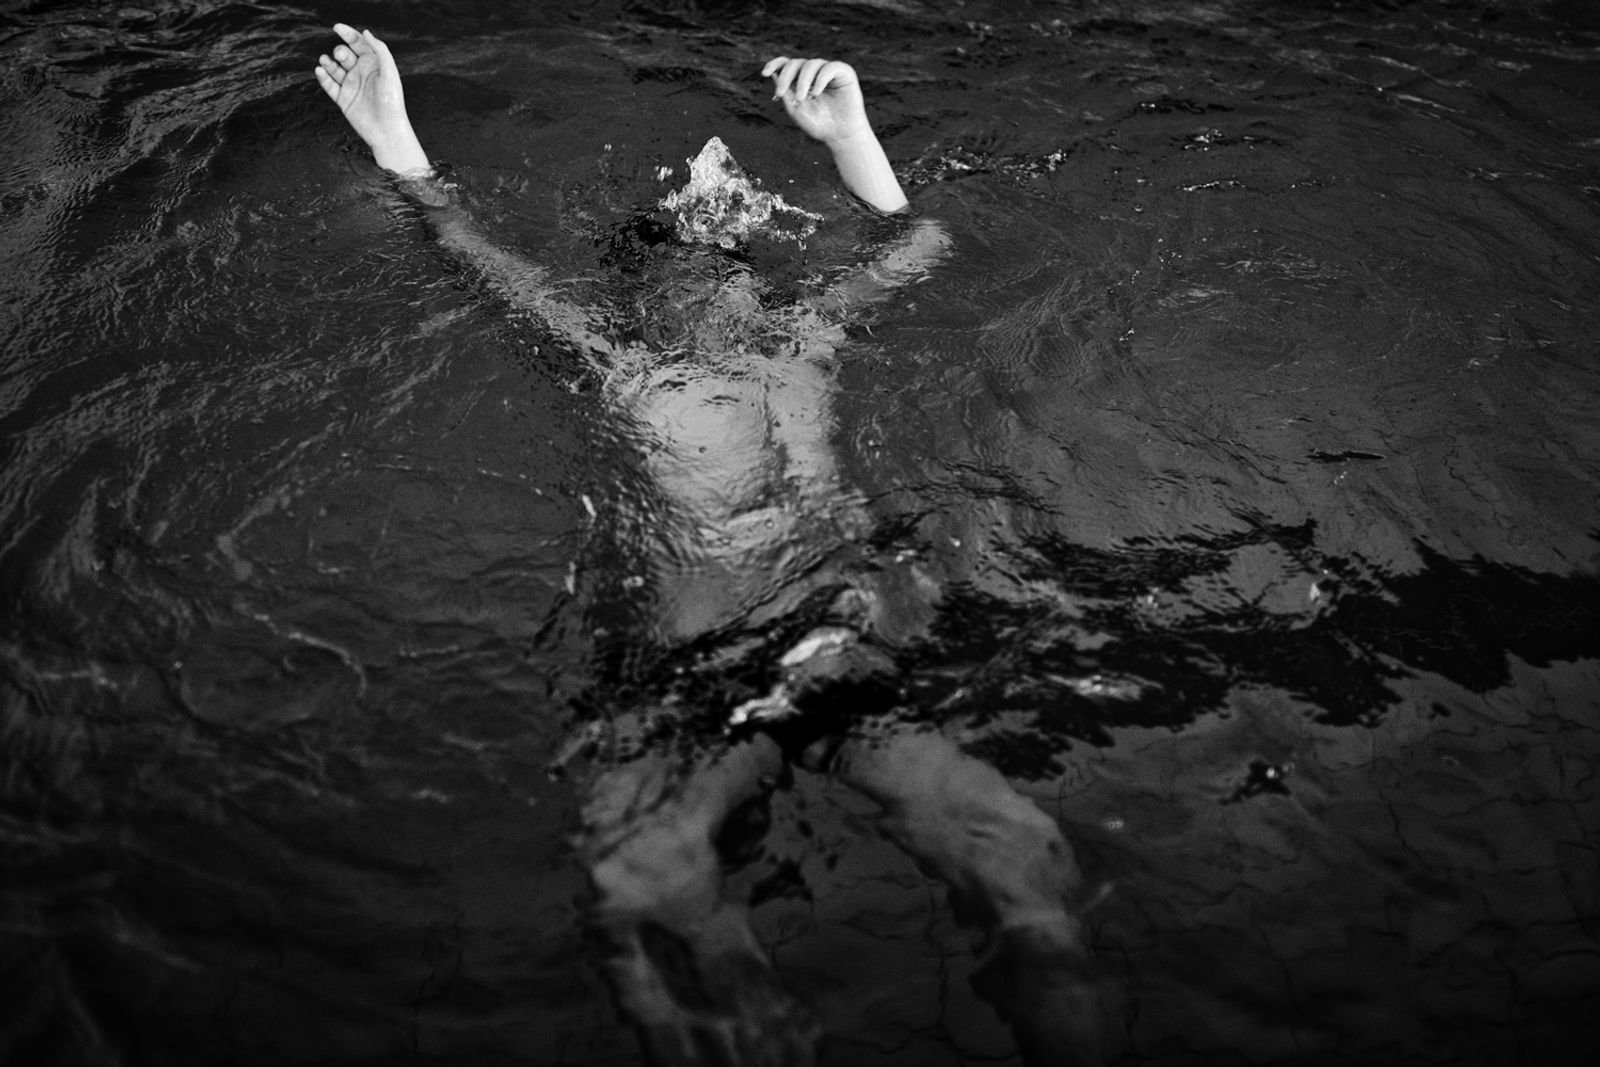 © BARBARA ZANON - february 2020: Michele in a pool